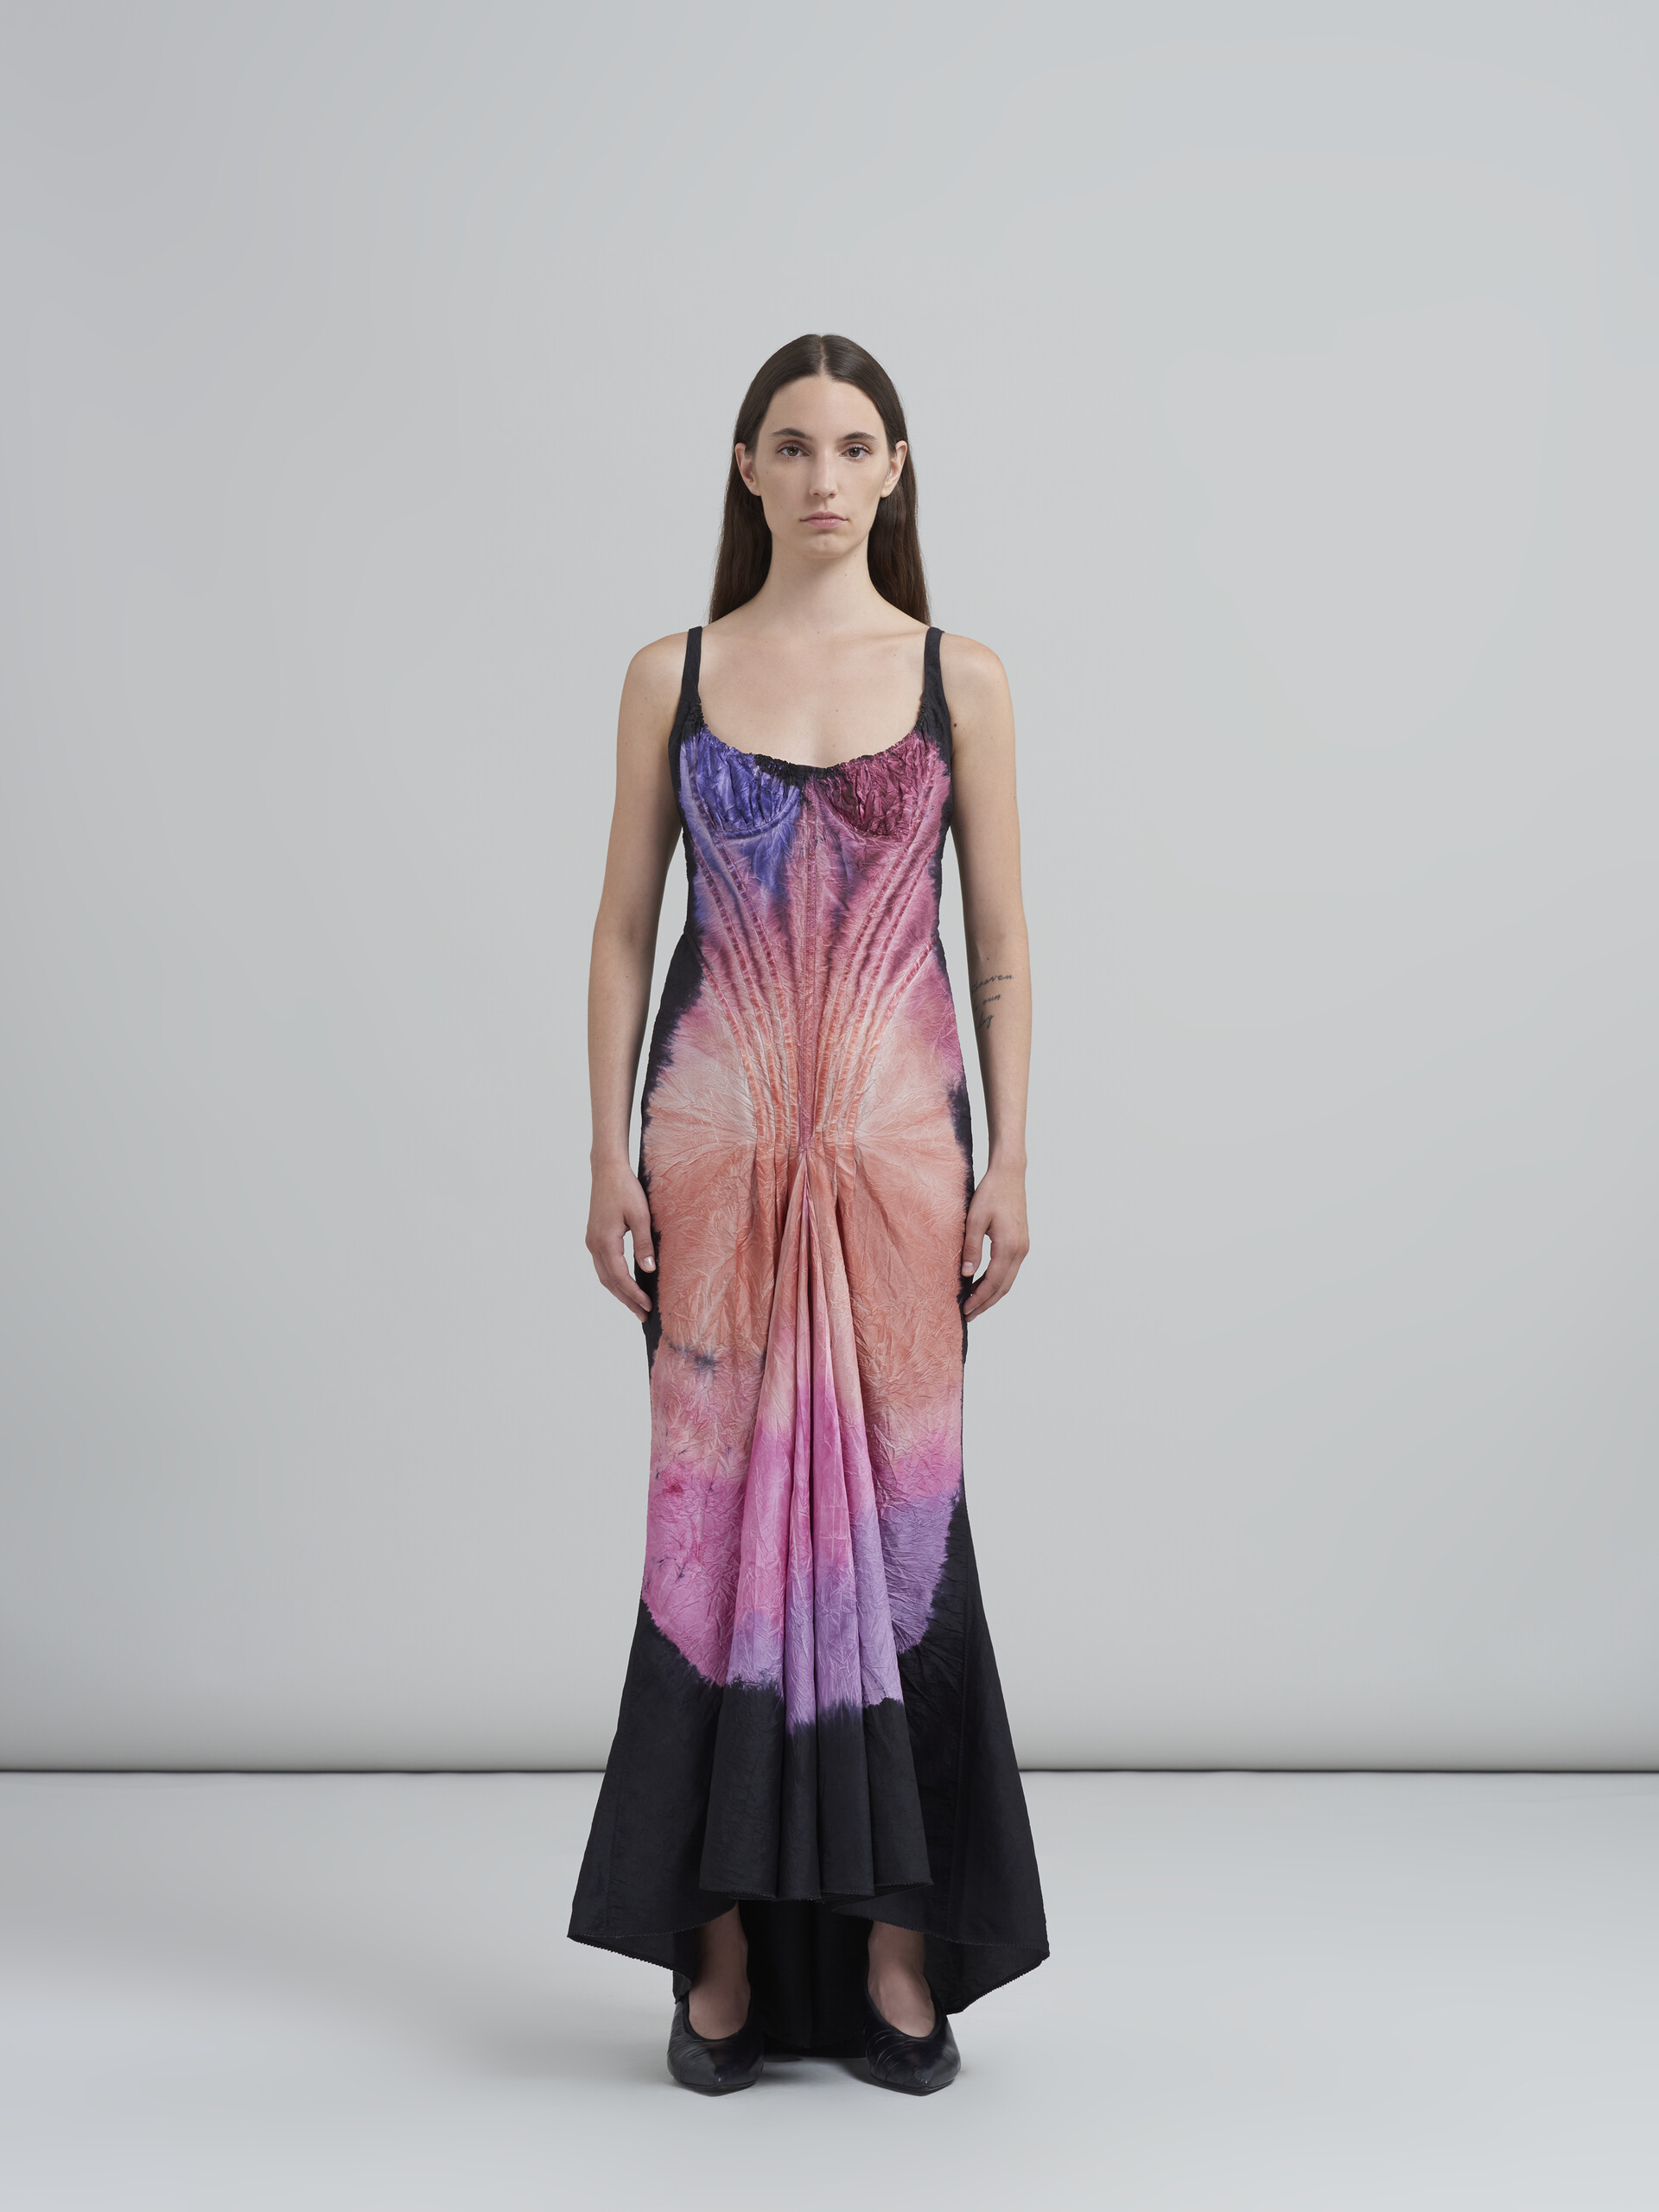 Dyed rainbow silk taffeta dress - Dresses - Image 2